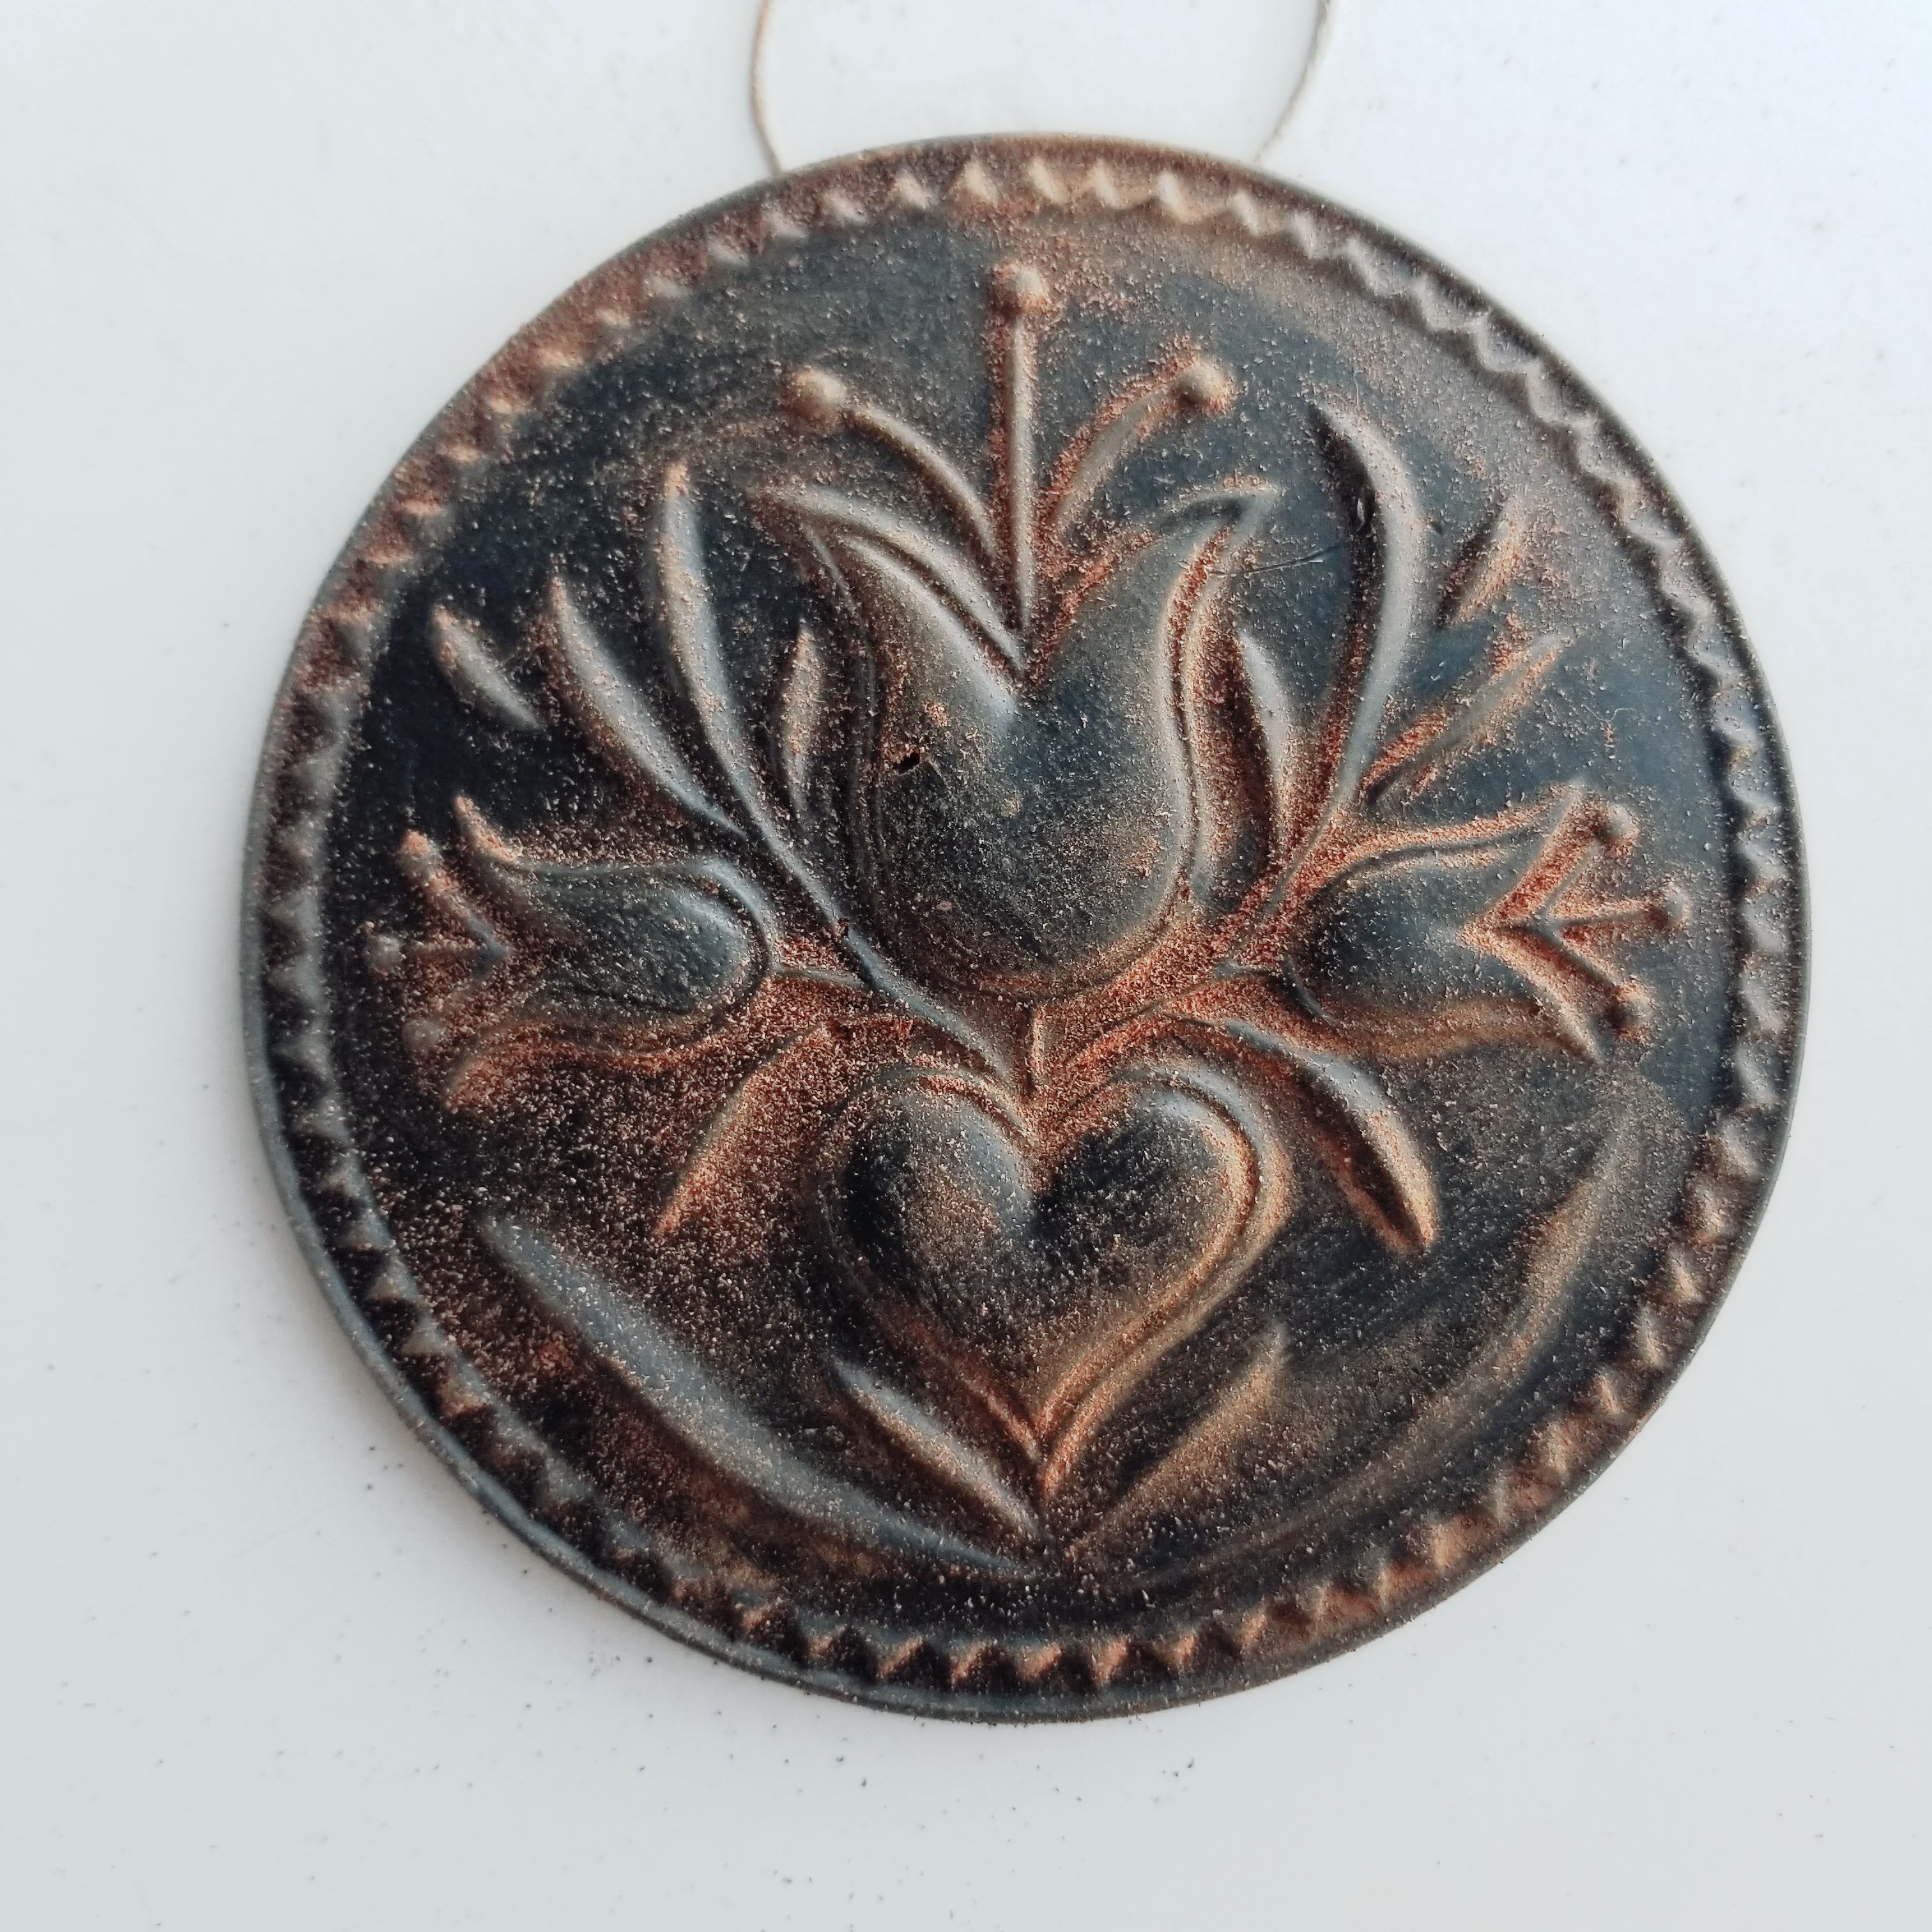 Swiss Heart Ornament